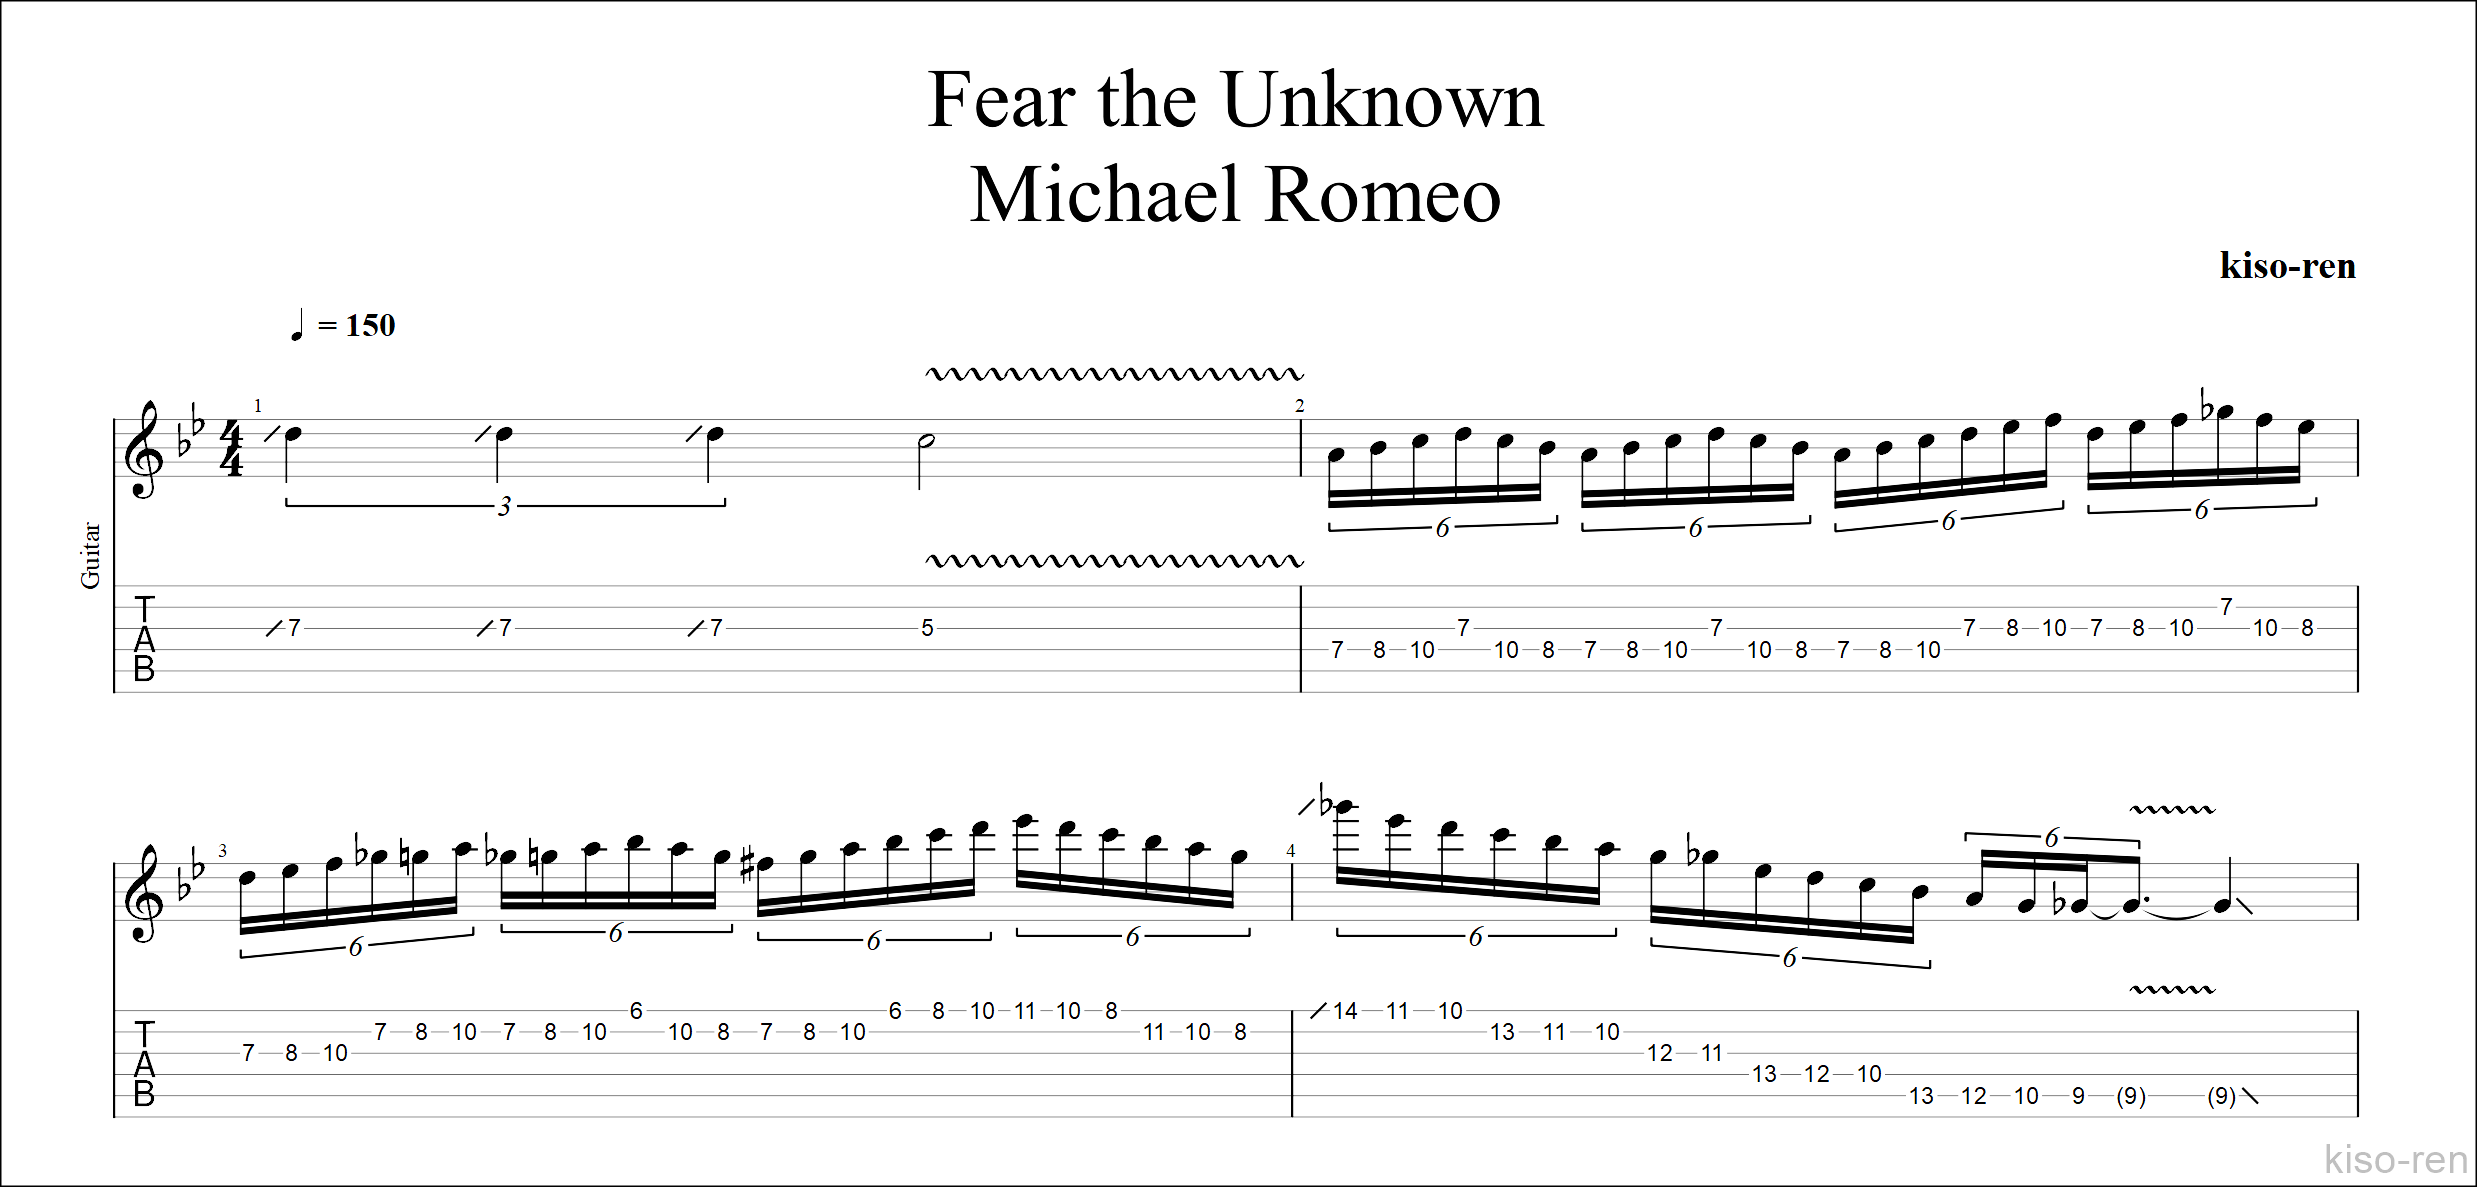 【TAB】Fear the Unknown / Michael Romeo Guitar Solo Slow Practice マイケルロメオ フィアーザアンノウン ピッキング基礎練習ゆっくり【Guitar Picking Vol.68】